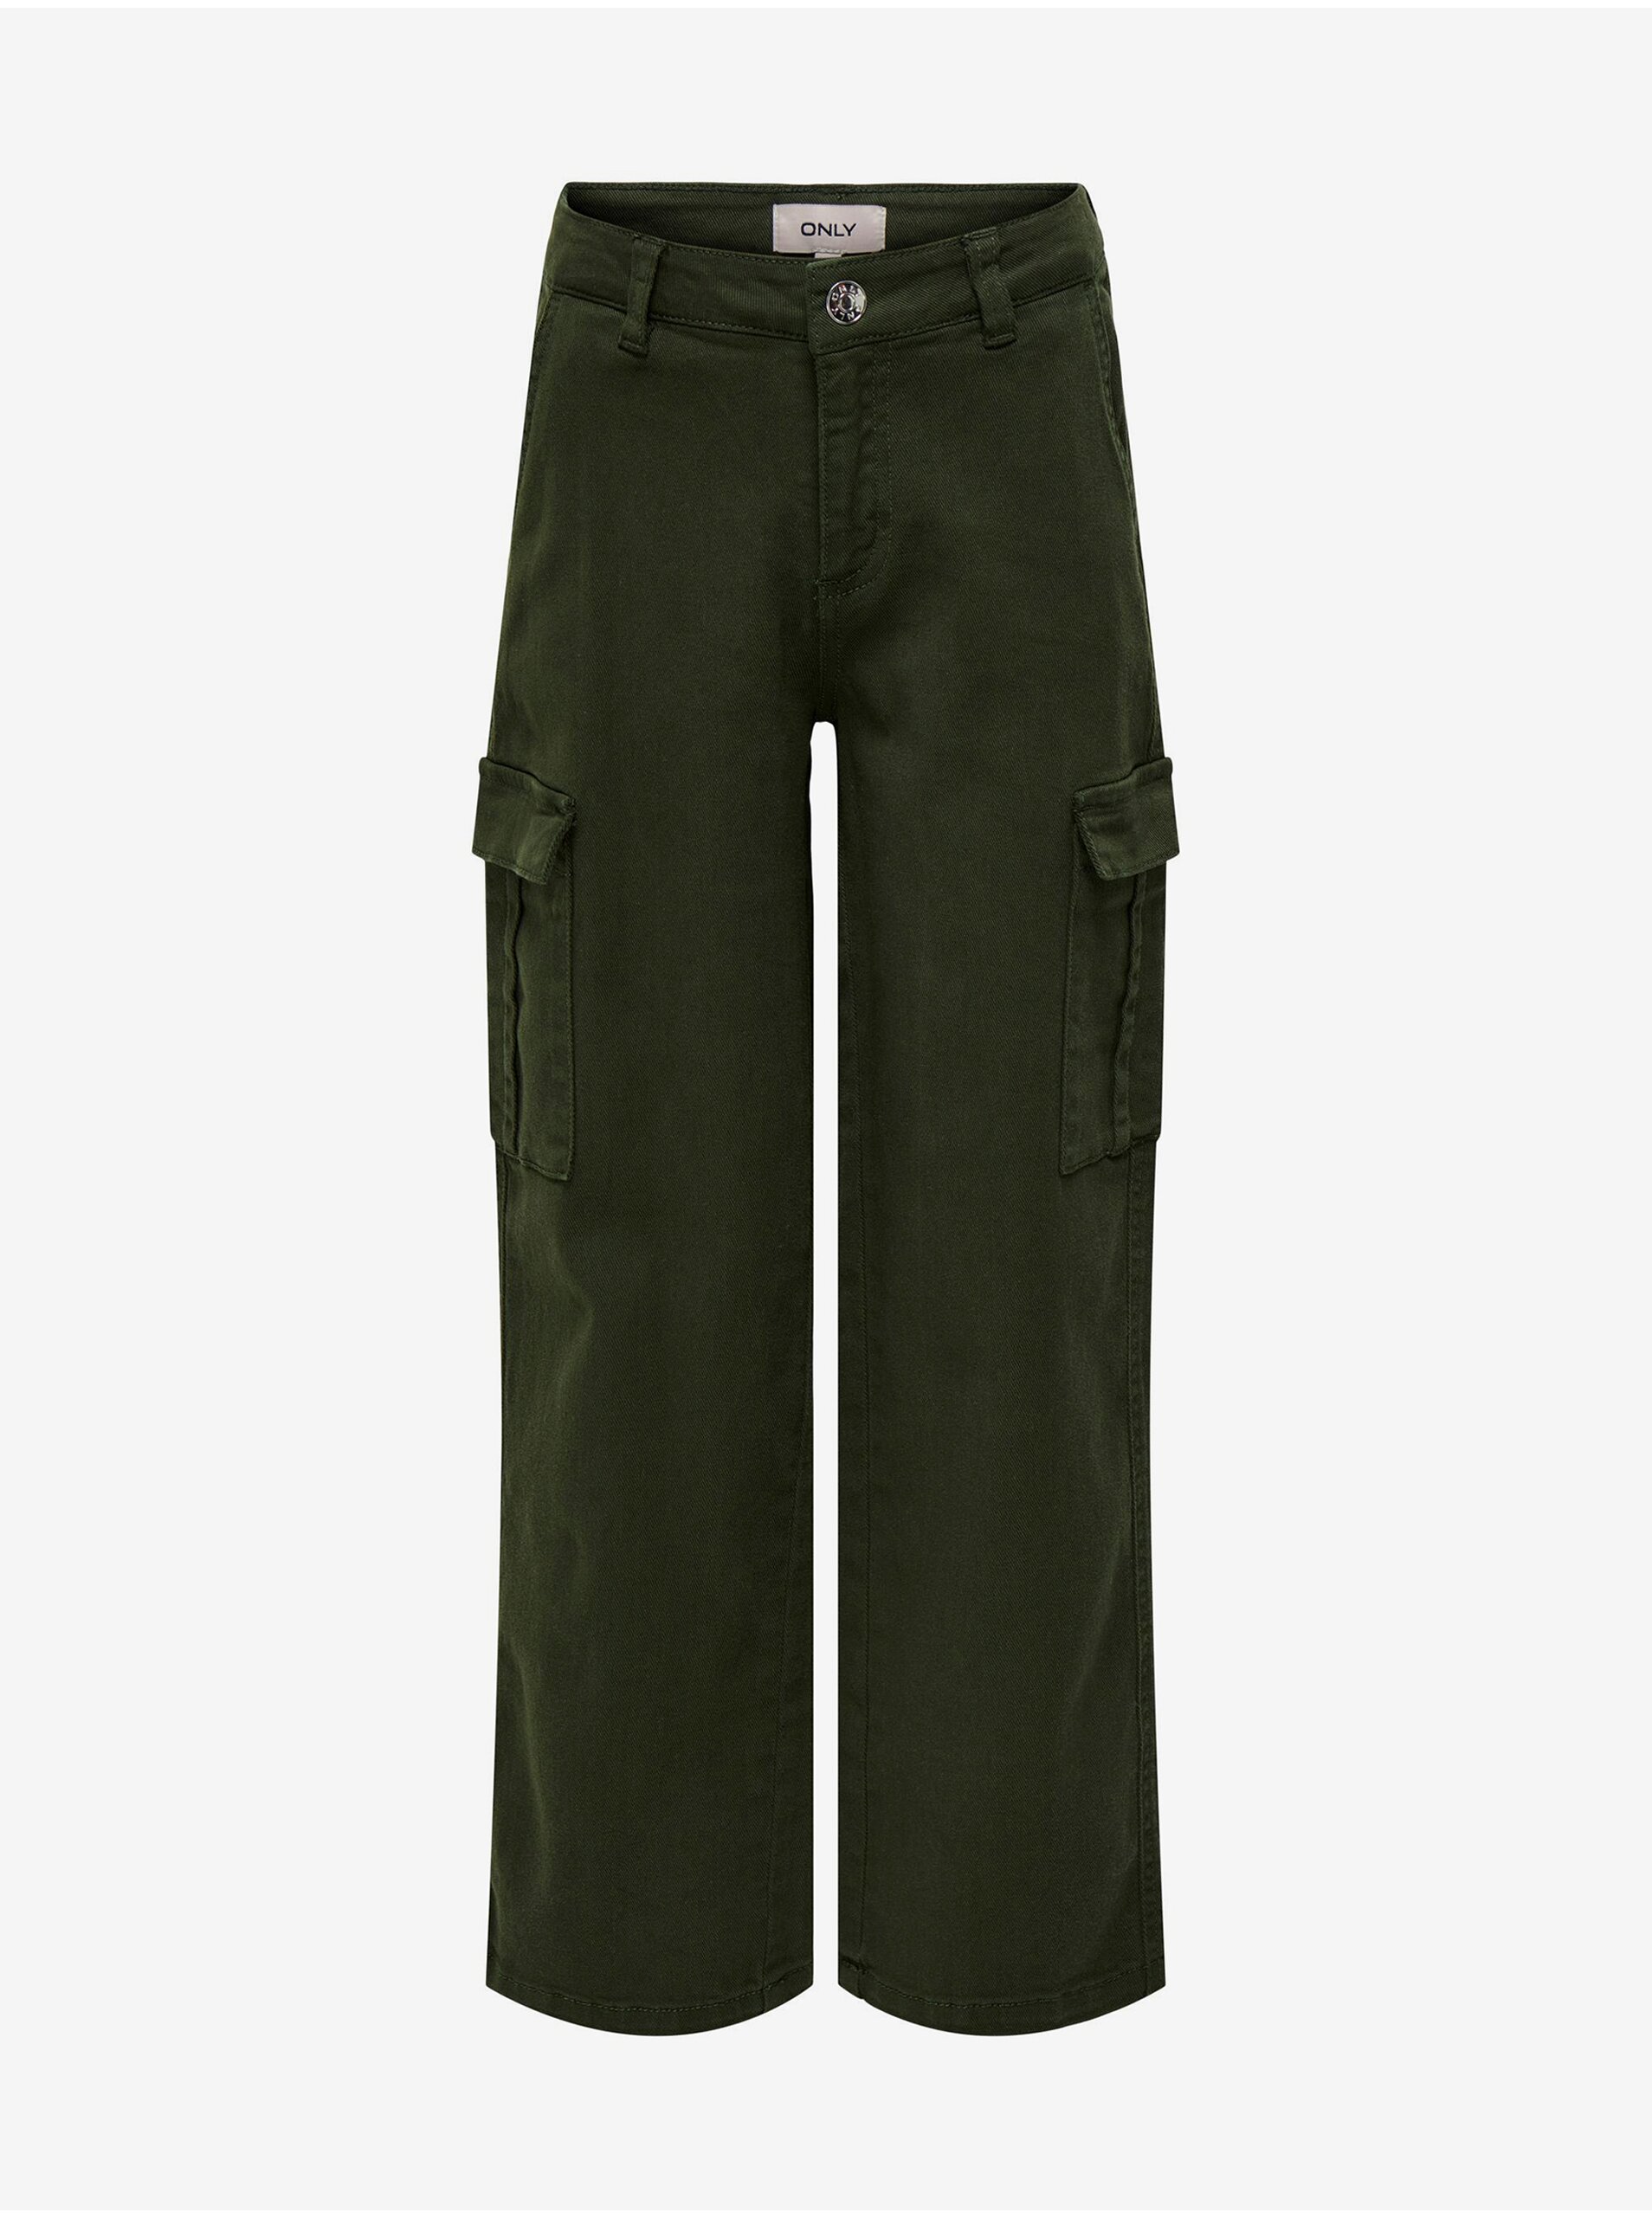 E-shop Khaki holčičí kalhoty s kapsami ONLY Arrow